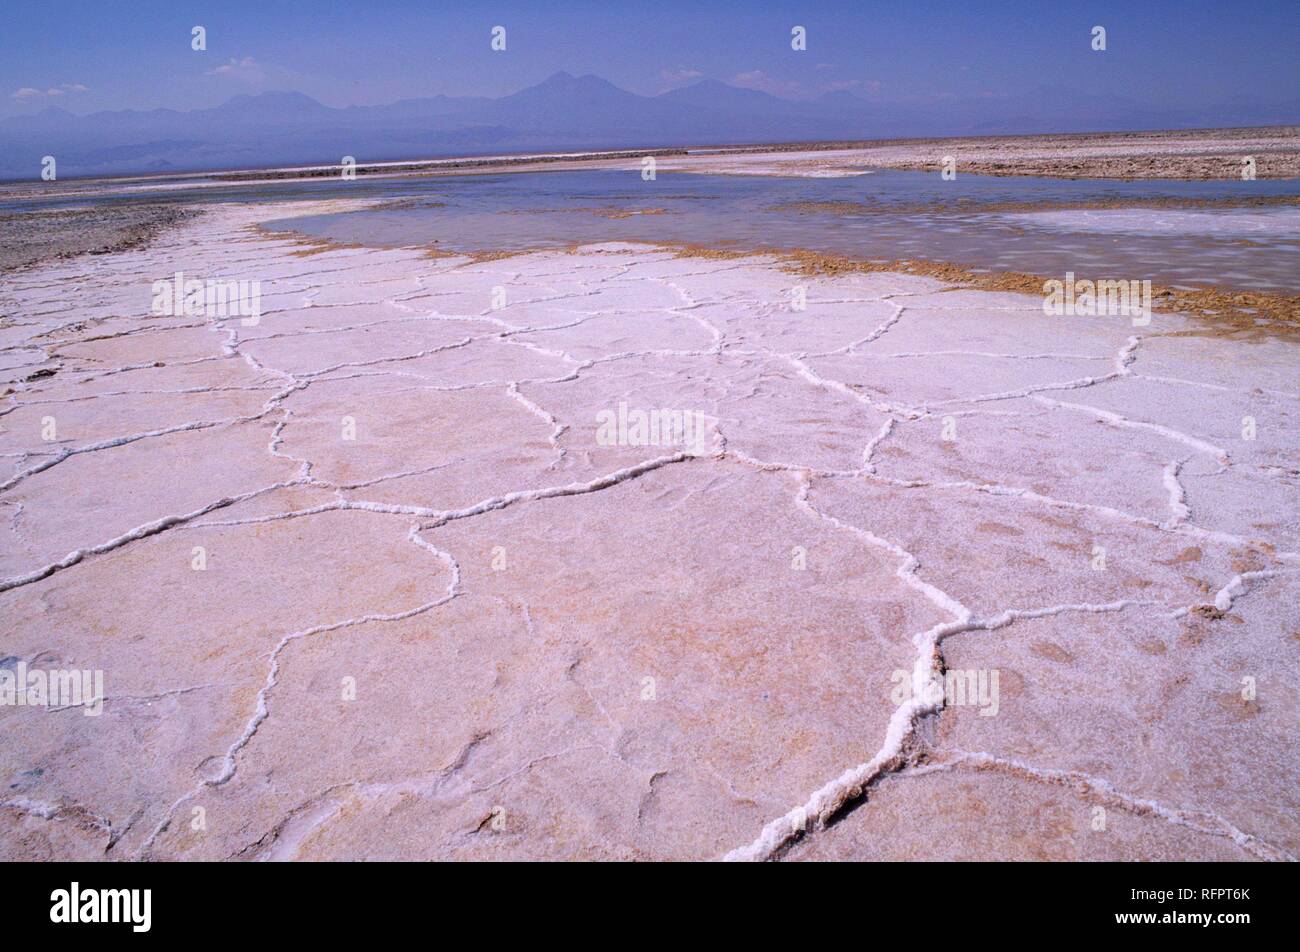 CHL, Chile, Atacama Desert: salt lake Salar de Atacama. Stock Photo